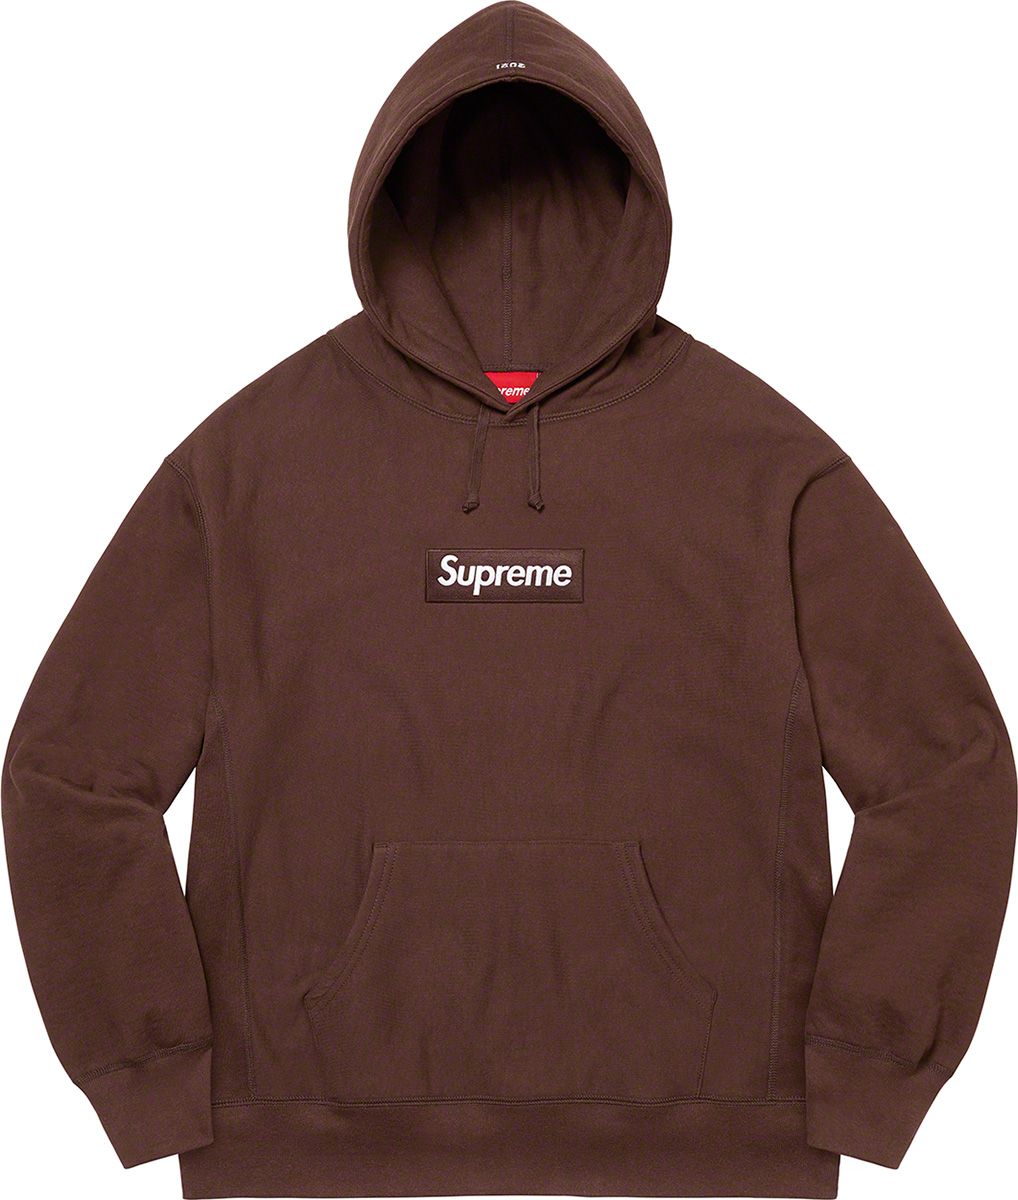 supreme-21aw-21fw-box-logo-hooded-sweatshirt